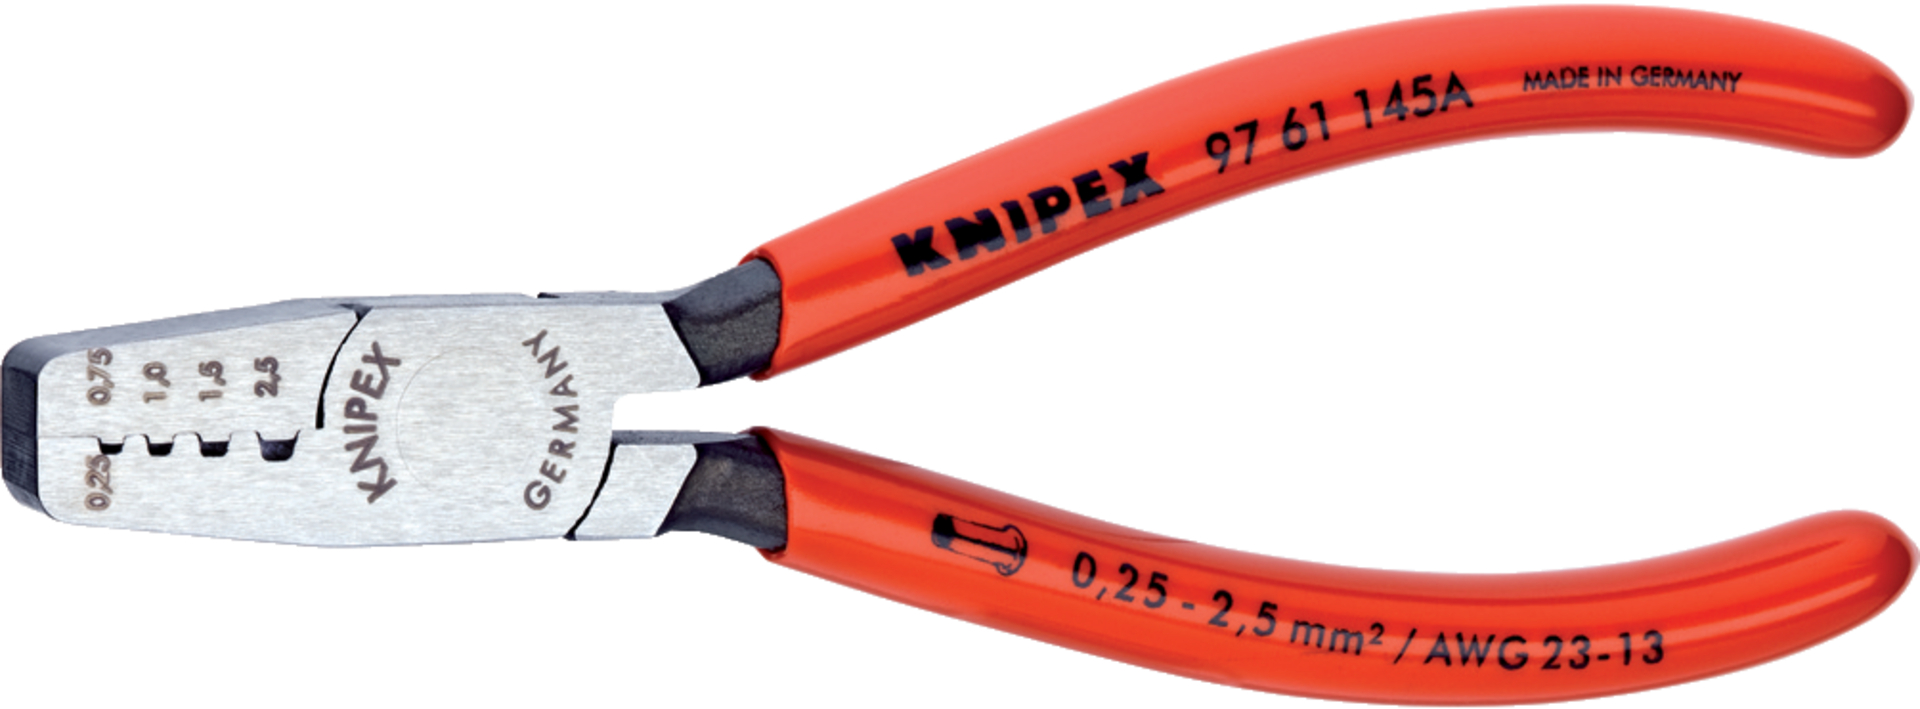 KNIPEX 97 61 145 A Crimpzange f. Aderendhülsen 145 mm